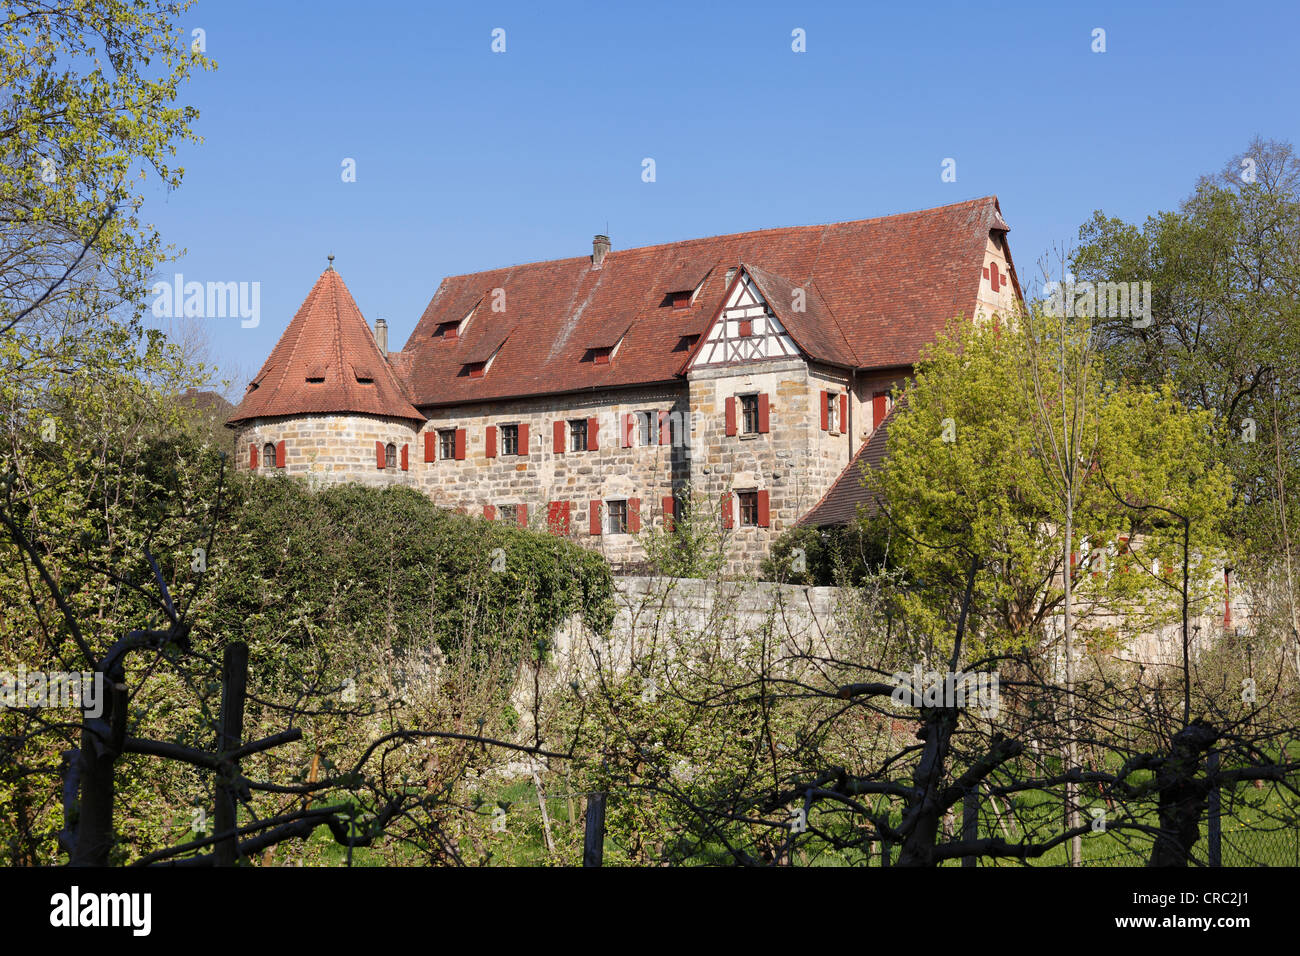 Schloss Kunreuth moated castle, Franconian Switzerland, Upper Franconia, Franconia, Bavaria, Germany, Europe Stock Photo